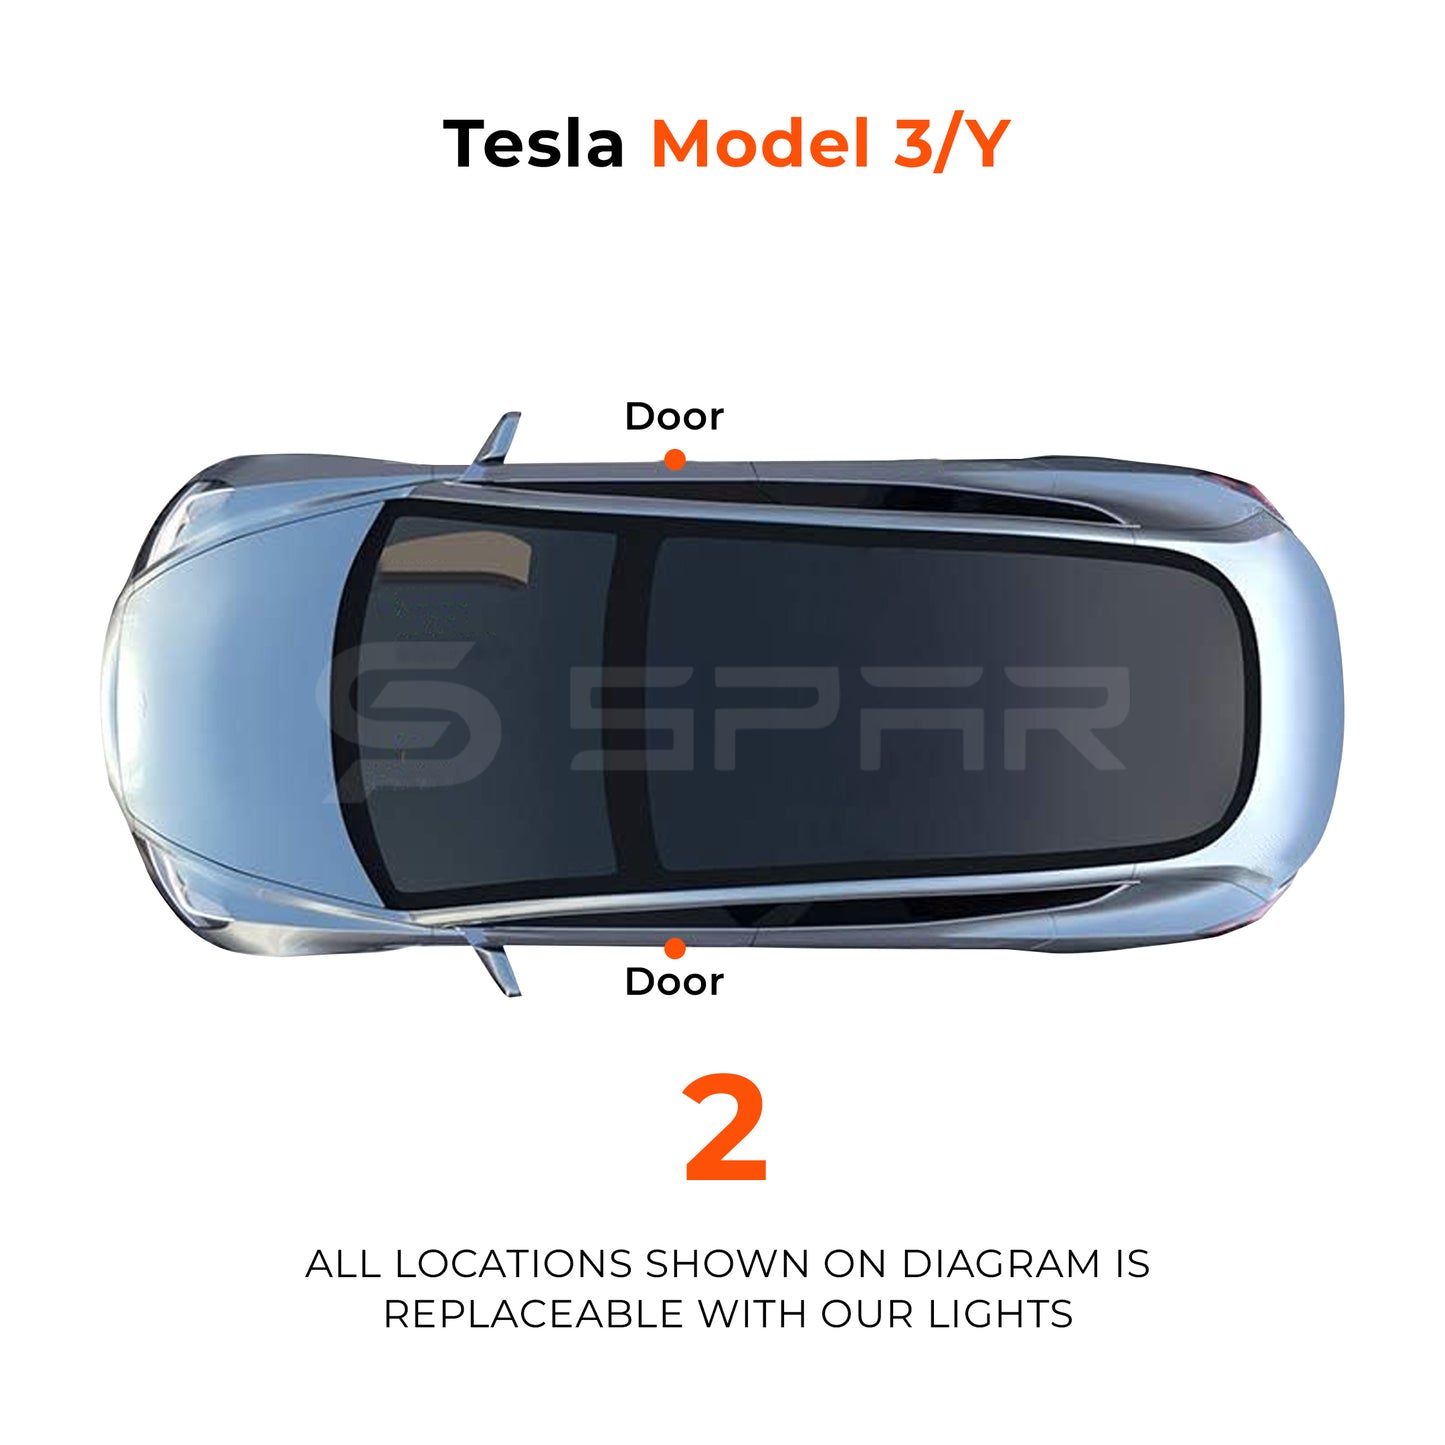 Ghost Welcome Lights for Tesla Model 3/Y